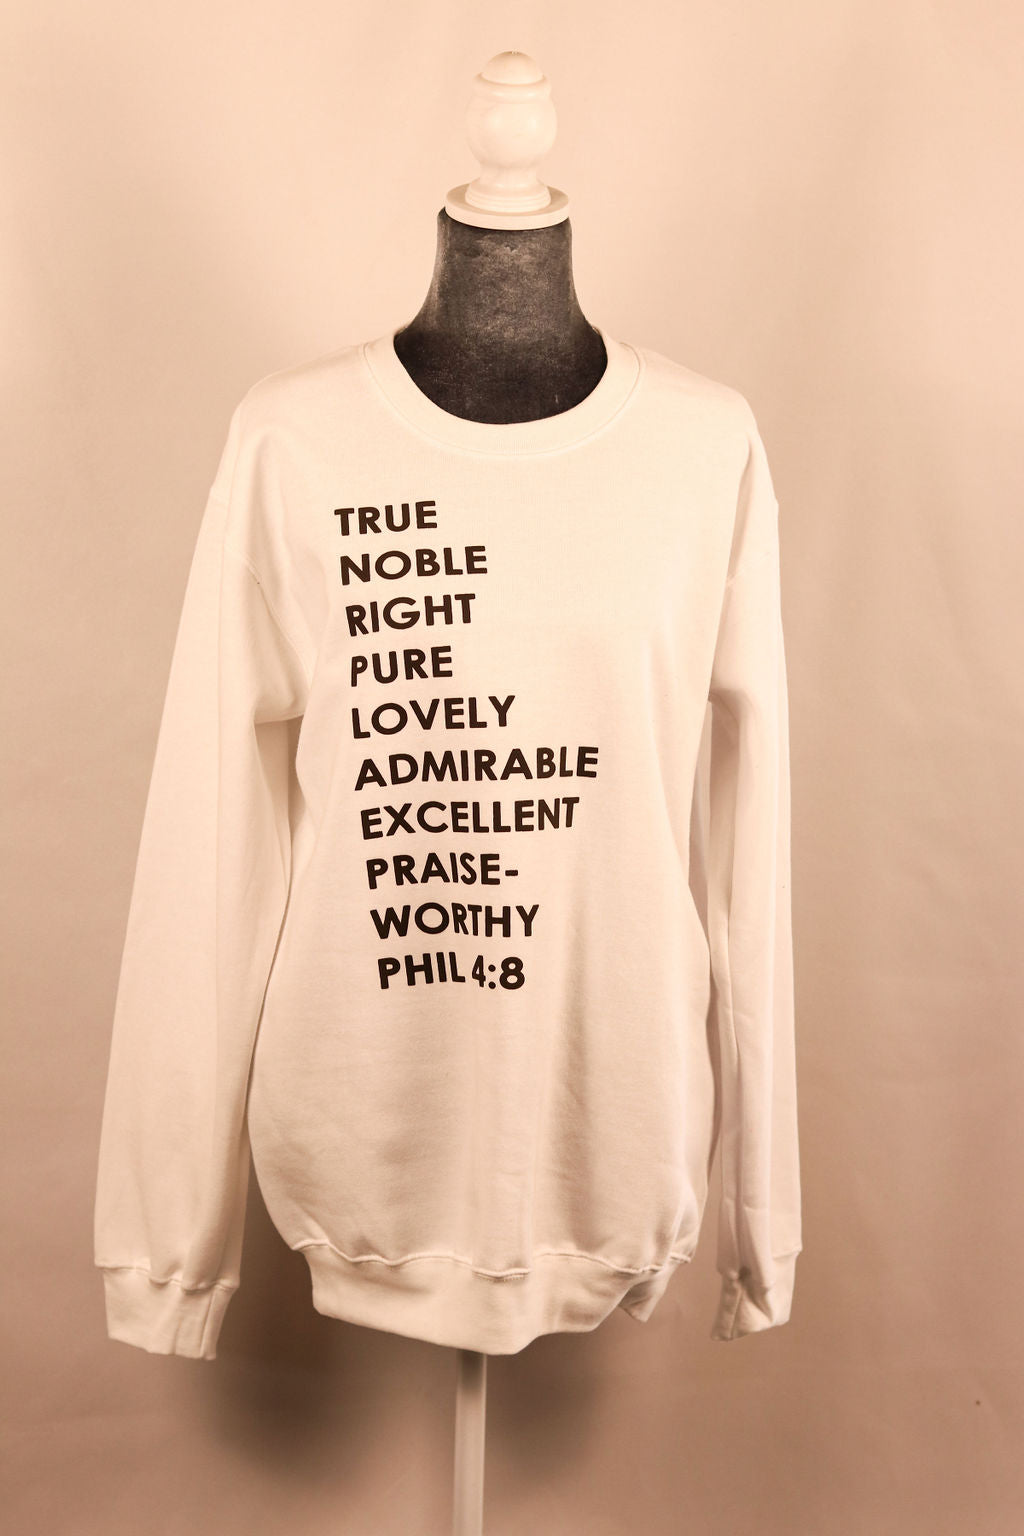 Phil 4:8 Crewneck Sweatshirt- White